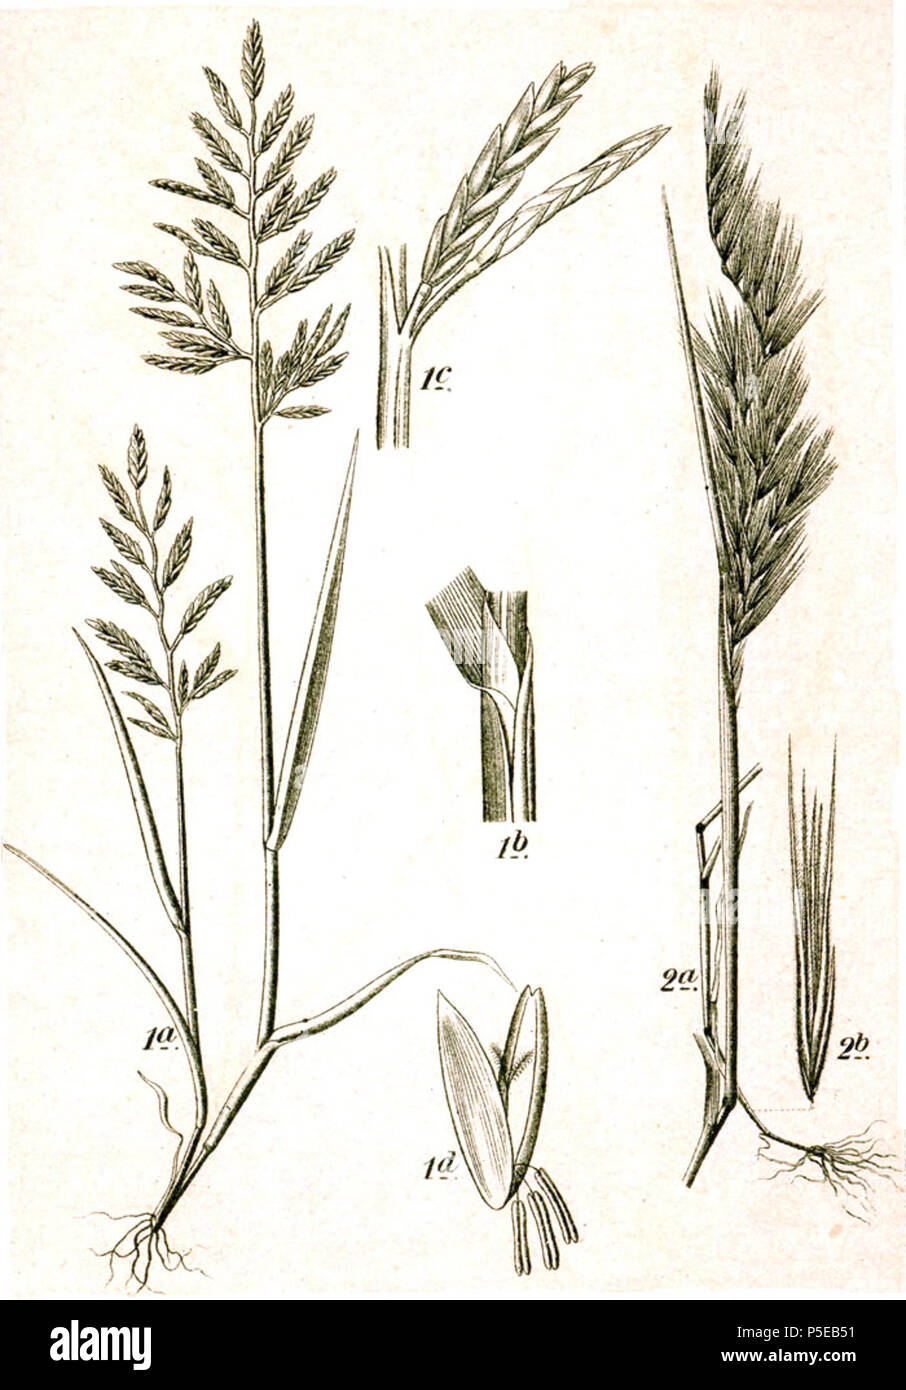 N/A. 1: Catapodium rigidum (L.) C.E.Hubb. subsp. rigidum, syn. Desmazeria rigida (L.) Tutin, Festuca rigida (L.) Kunth 2. Vulpia myuros (L.) C.C.Gmel. var. myuros, syn. Festuca myuros L. Original Caption 1. Starrer Schwingel, Festuca rigida Kunth. 2. Kamm-Schwingel, F. myuros Ehrh. . 1796. Johann Georg Sturm (Painter: Jacob Sturm) 554 Festuca spp Sturm41 Stock Photo